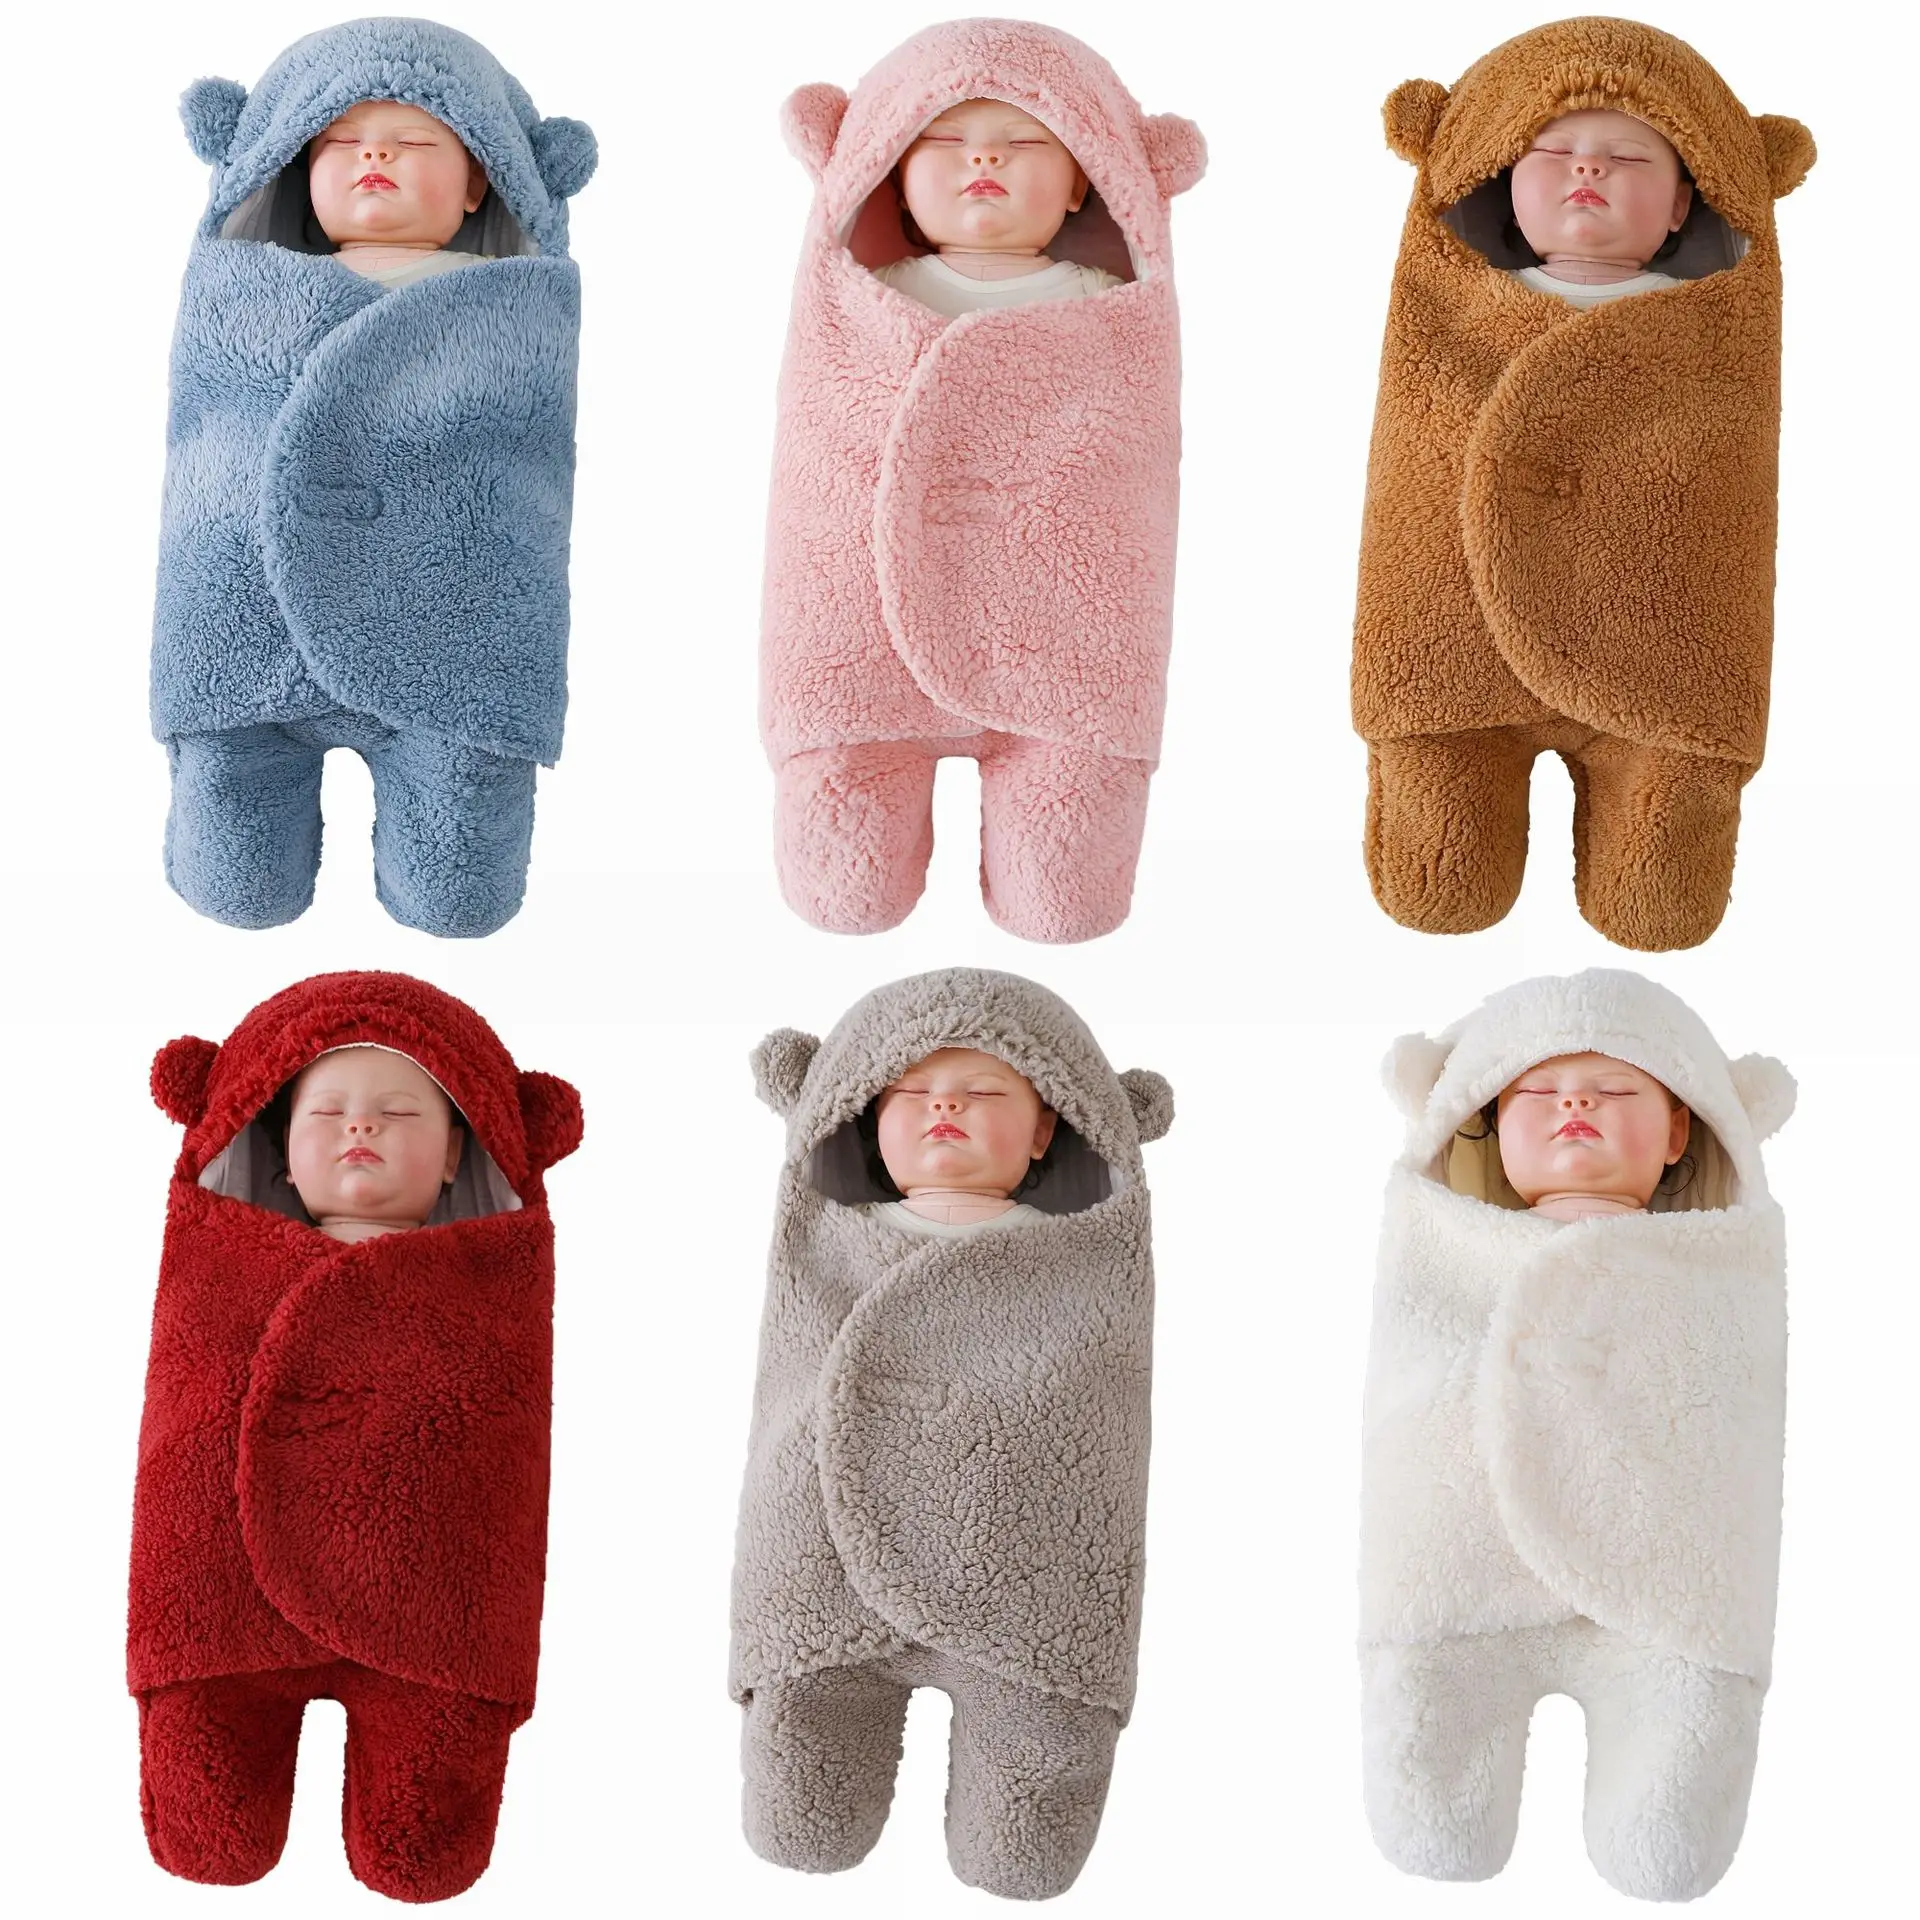 

Babies Sleeping Bags for Kids Baby Blanket Swaddle Infant Sleep Sack Cotton Envelope For Newborn Cocoon Swadde for Toddler 0-6M